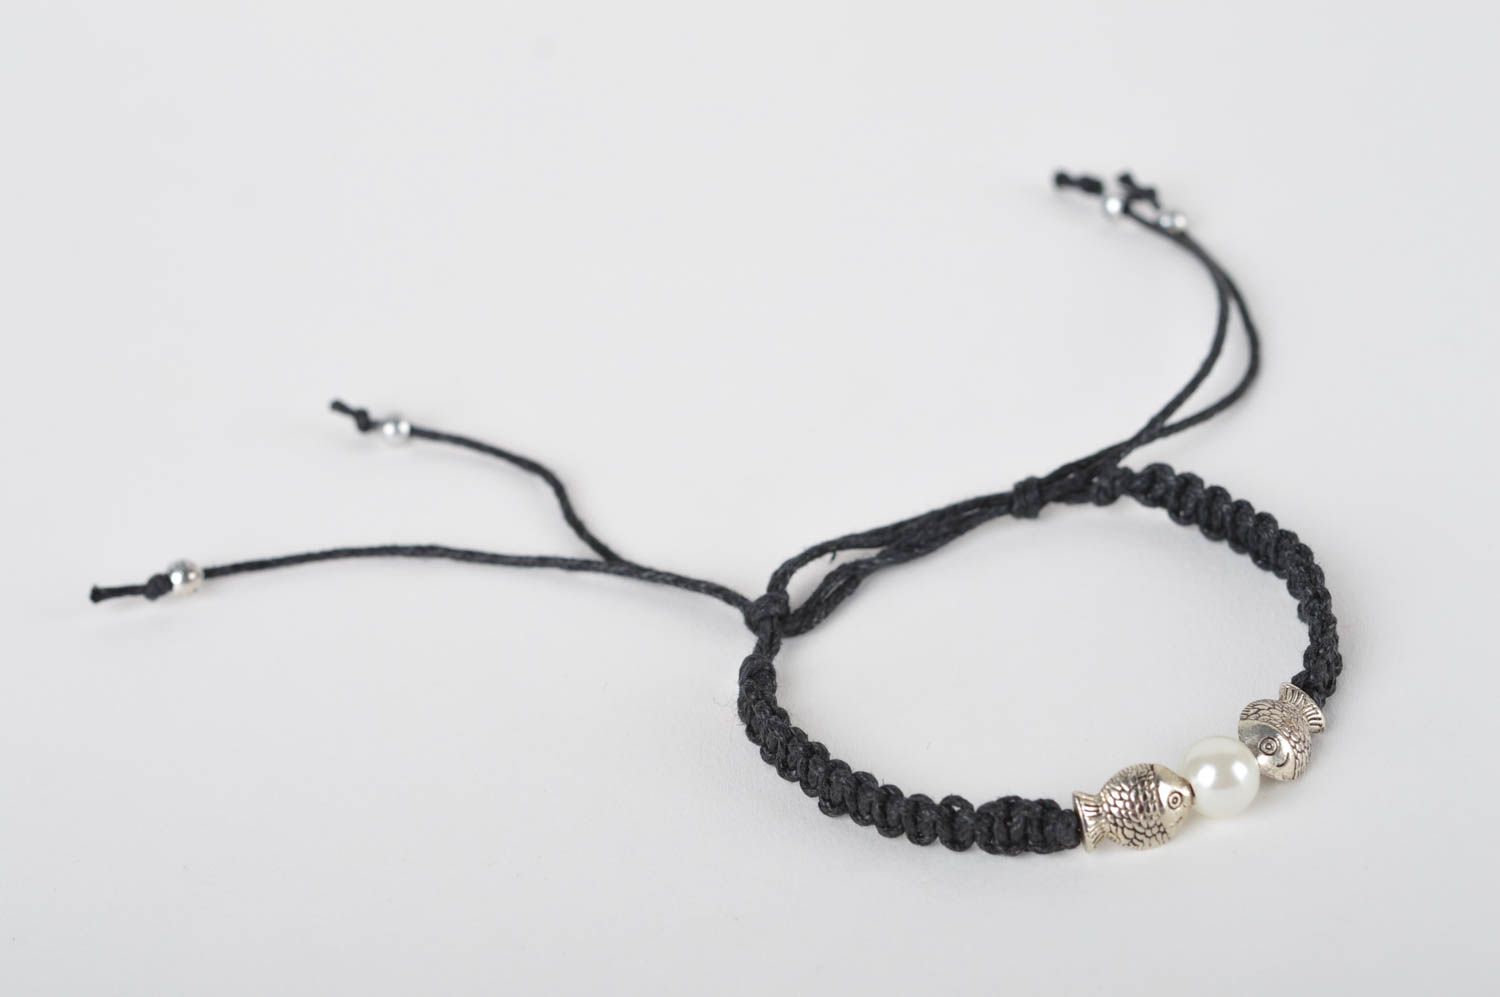 Handmade string bracelet woven thread bracelet cool jewelry designs gift ideas photo 2